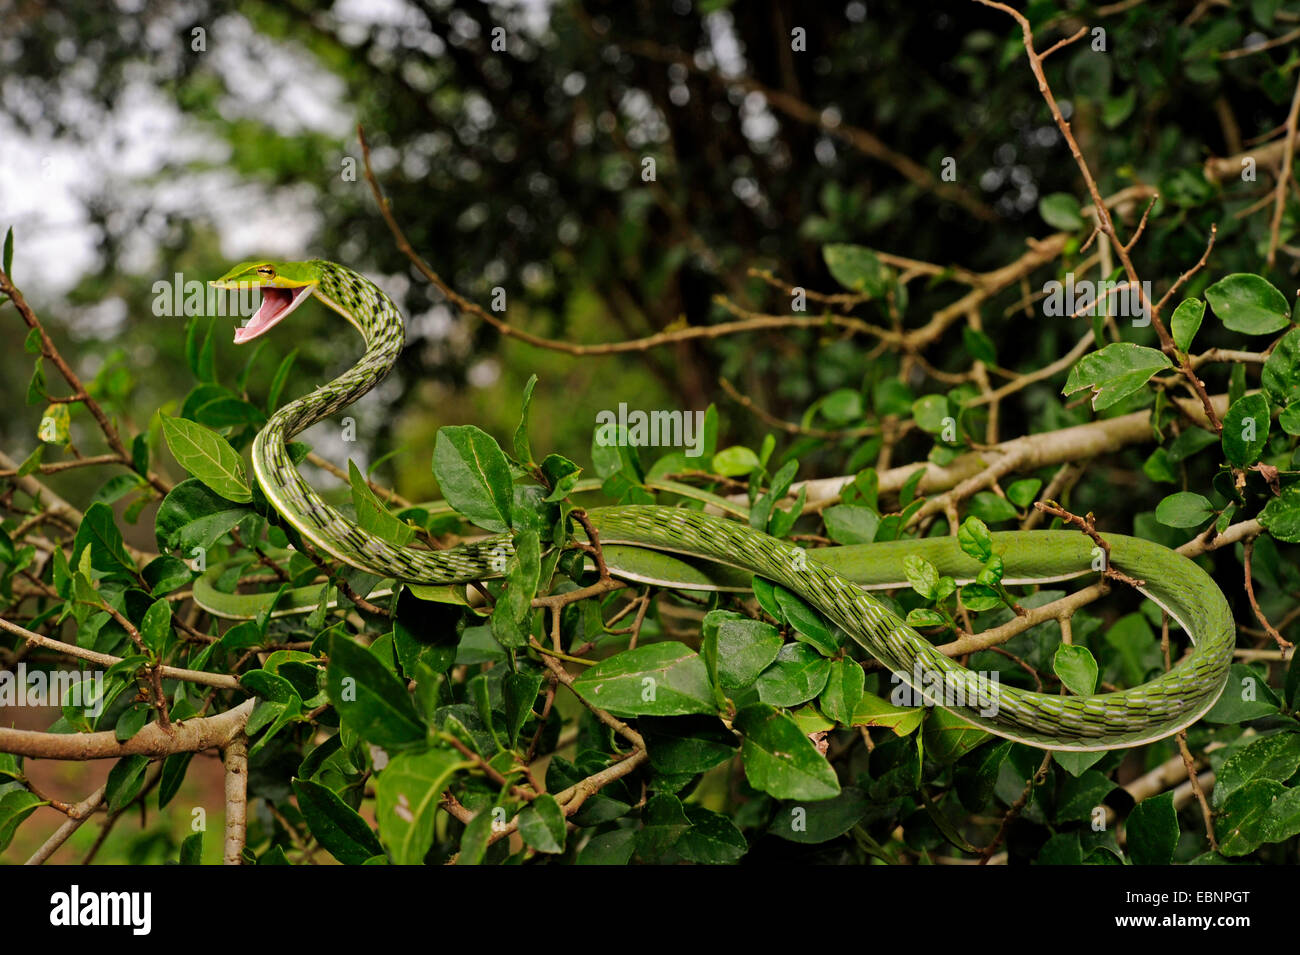 Longnose whipsnake, Green vine snake (Ahaetulla nasuta), lying on a branch with open mouth, Sri Lanka, Sinharaja Forest National Park Stock Photo